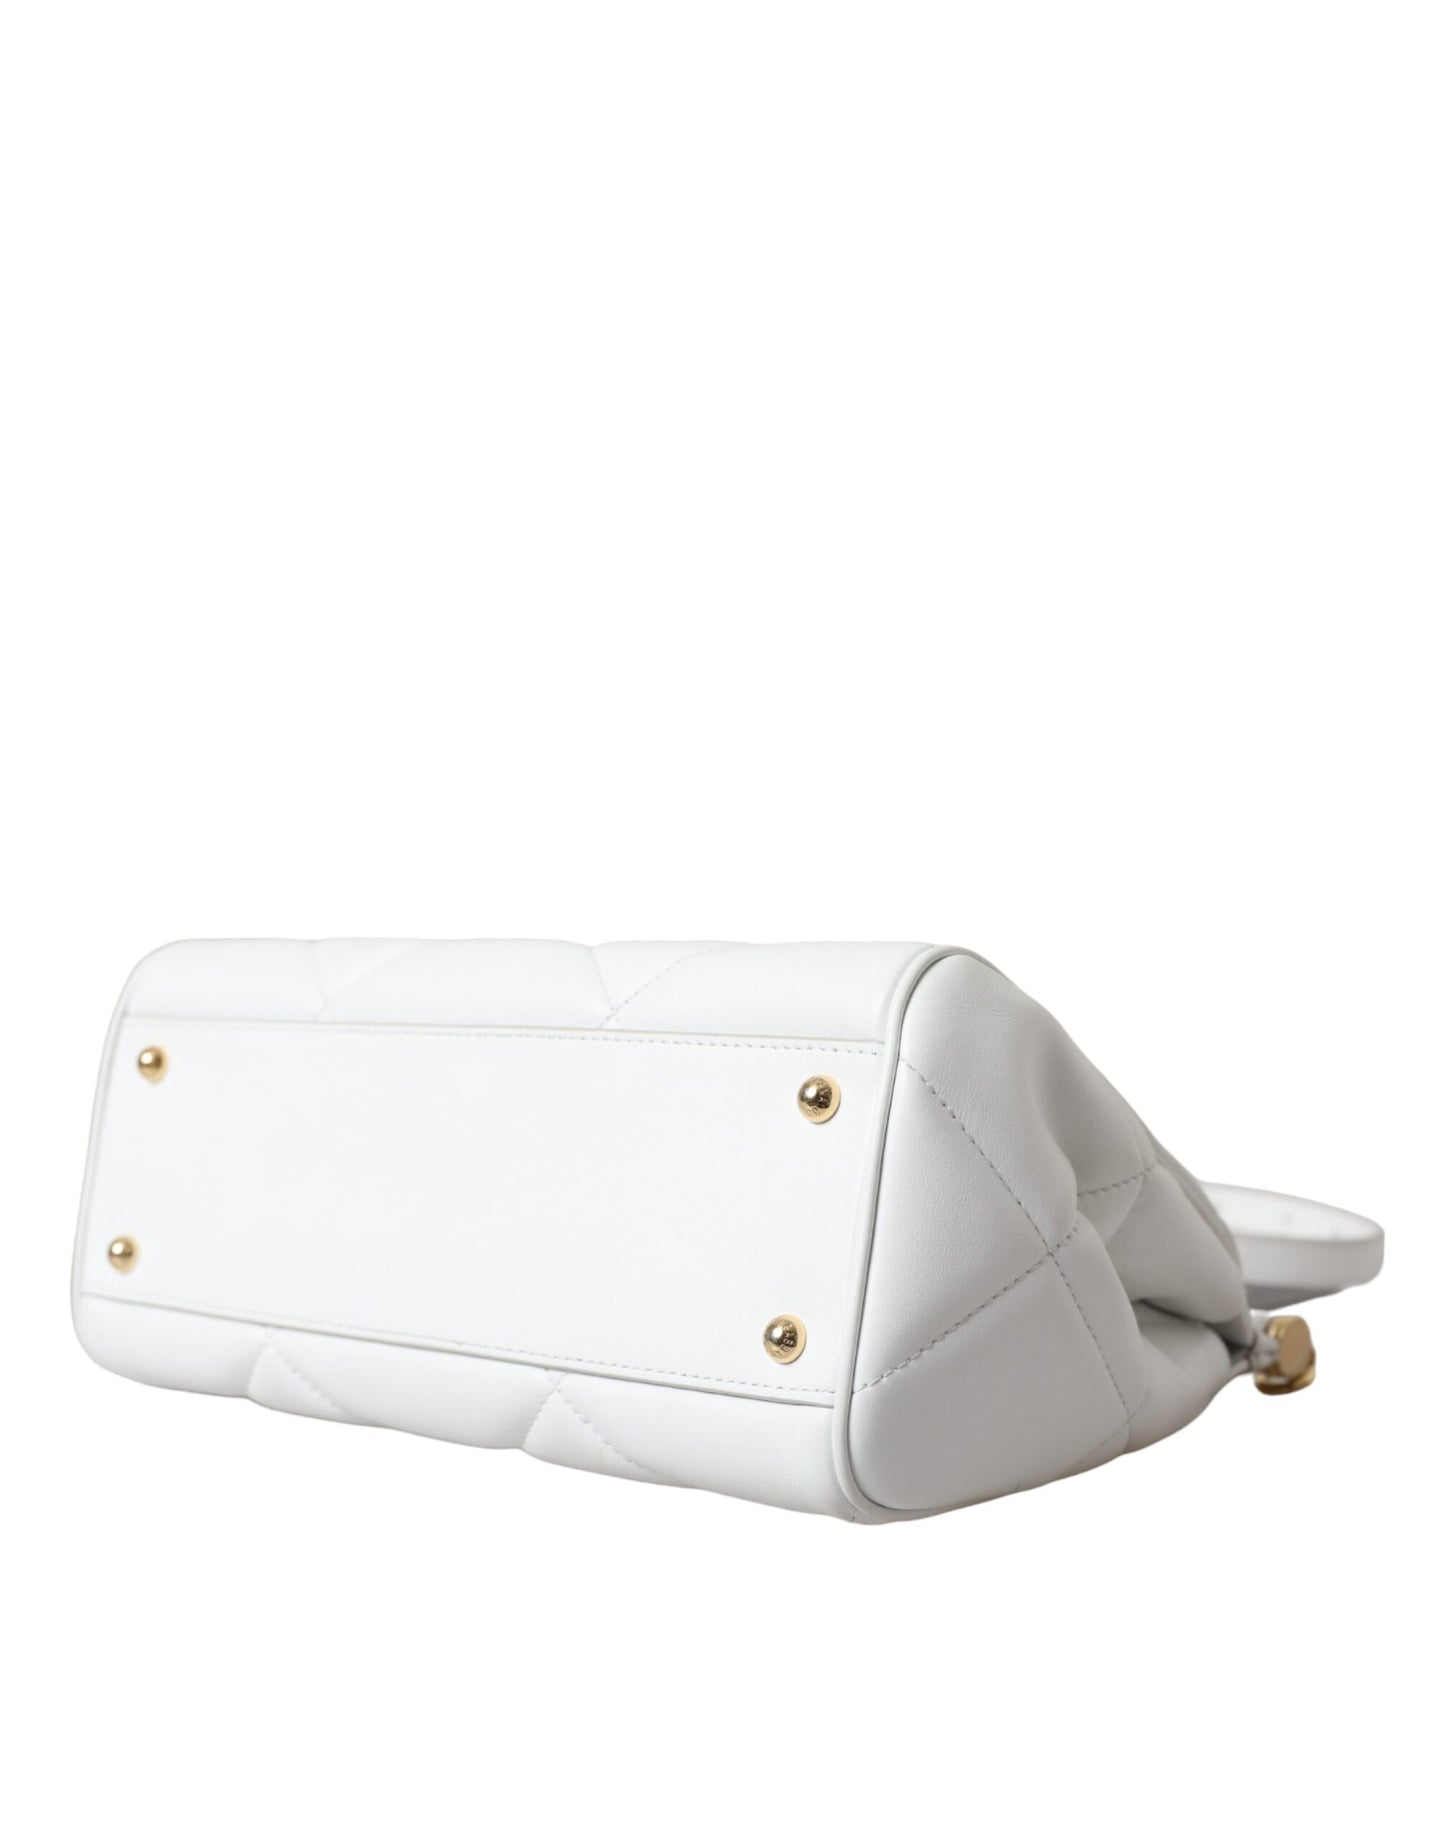 Dolce & Gabbana White Quilted Leather SICILY Hand Shoulder Purse Satchel Bag